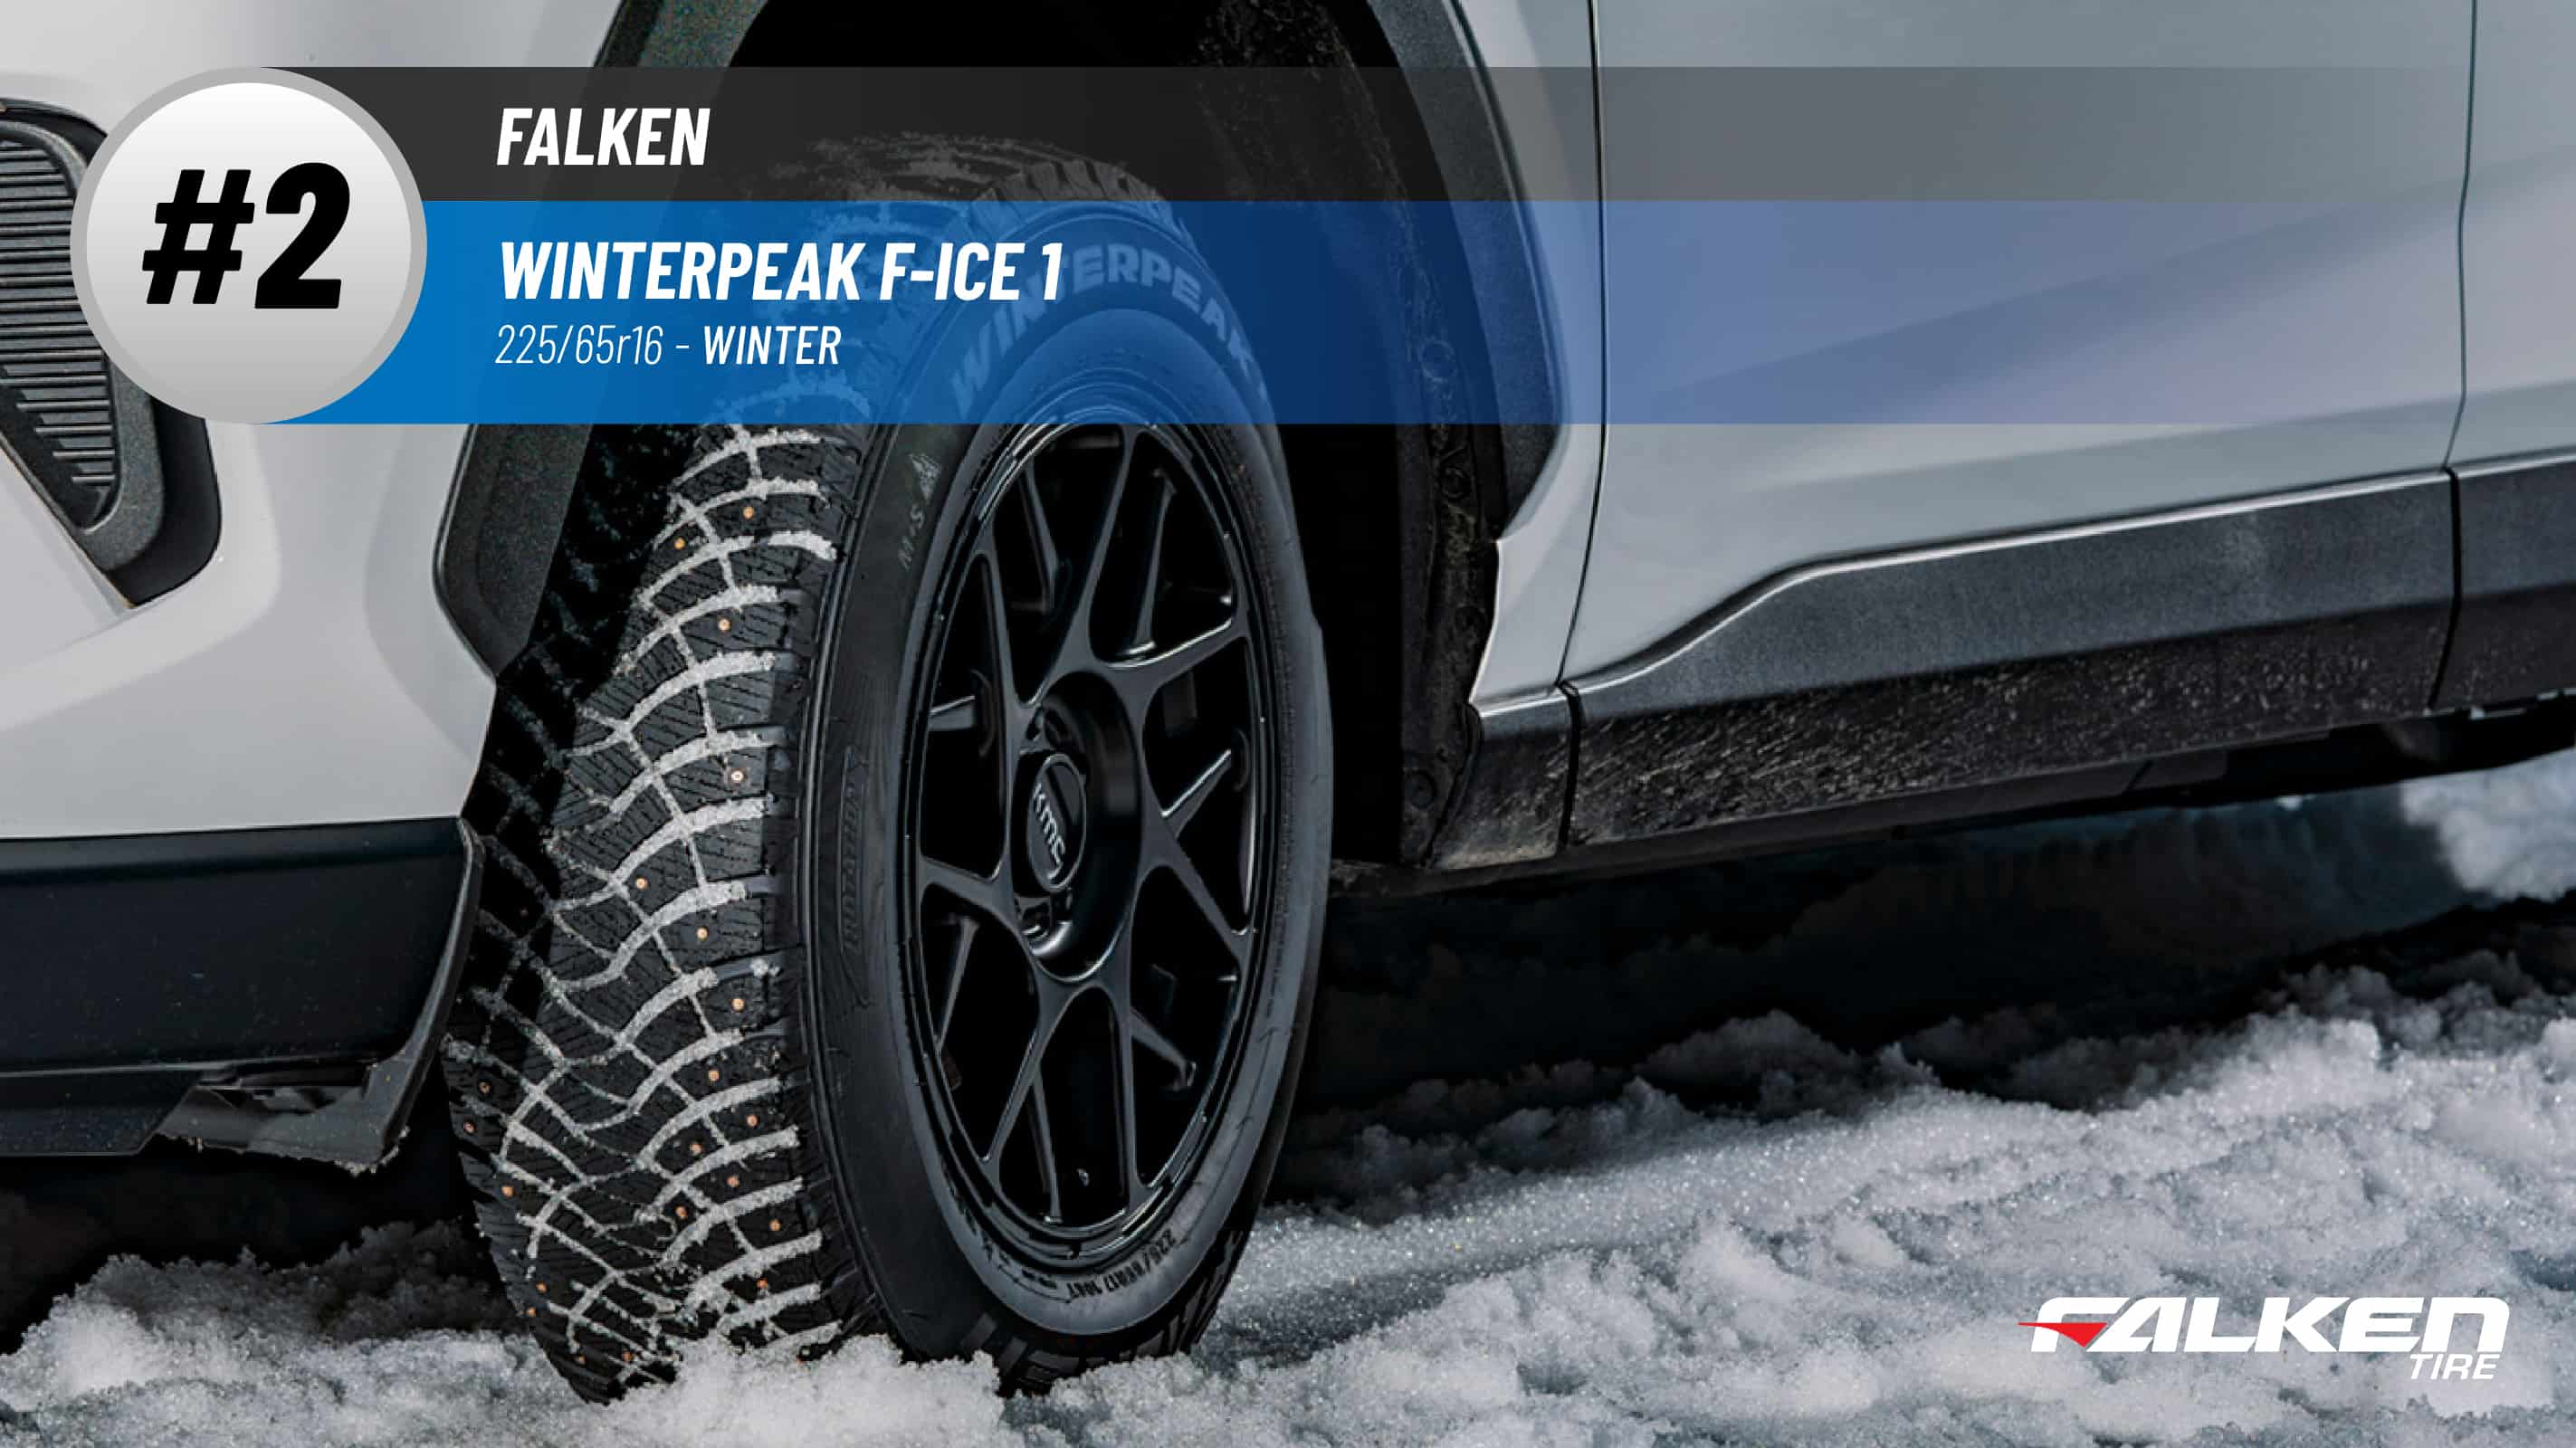 Top #2 Winter Tires: Falken Winterpeak F-ICE 1 – 225/65r16